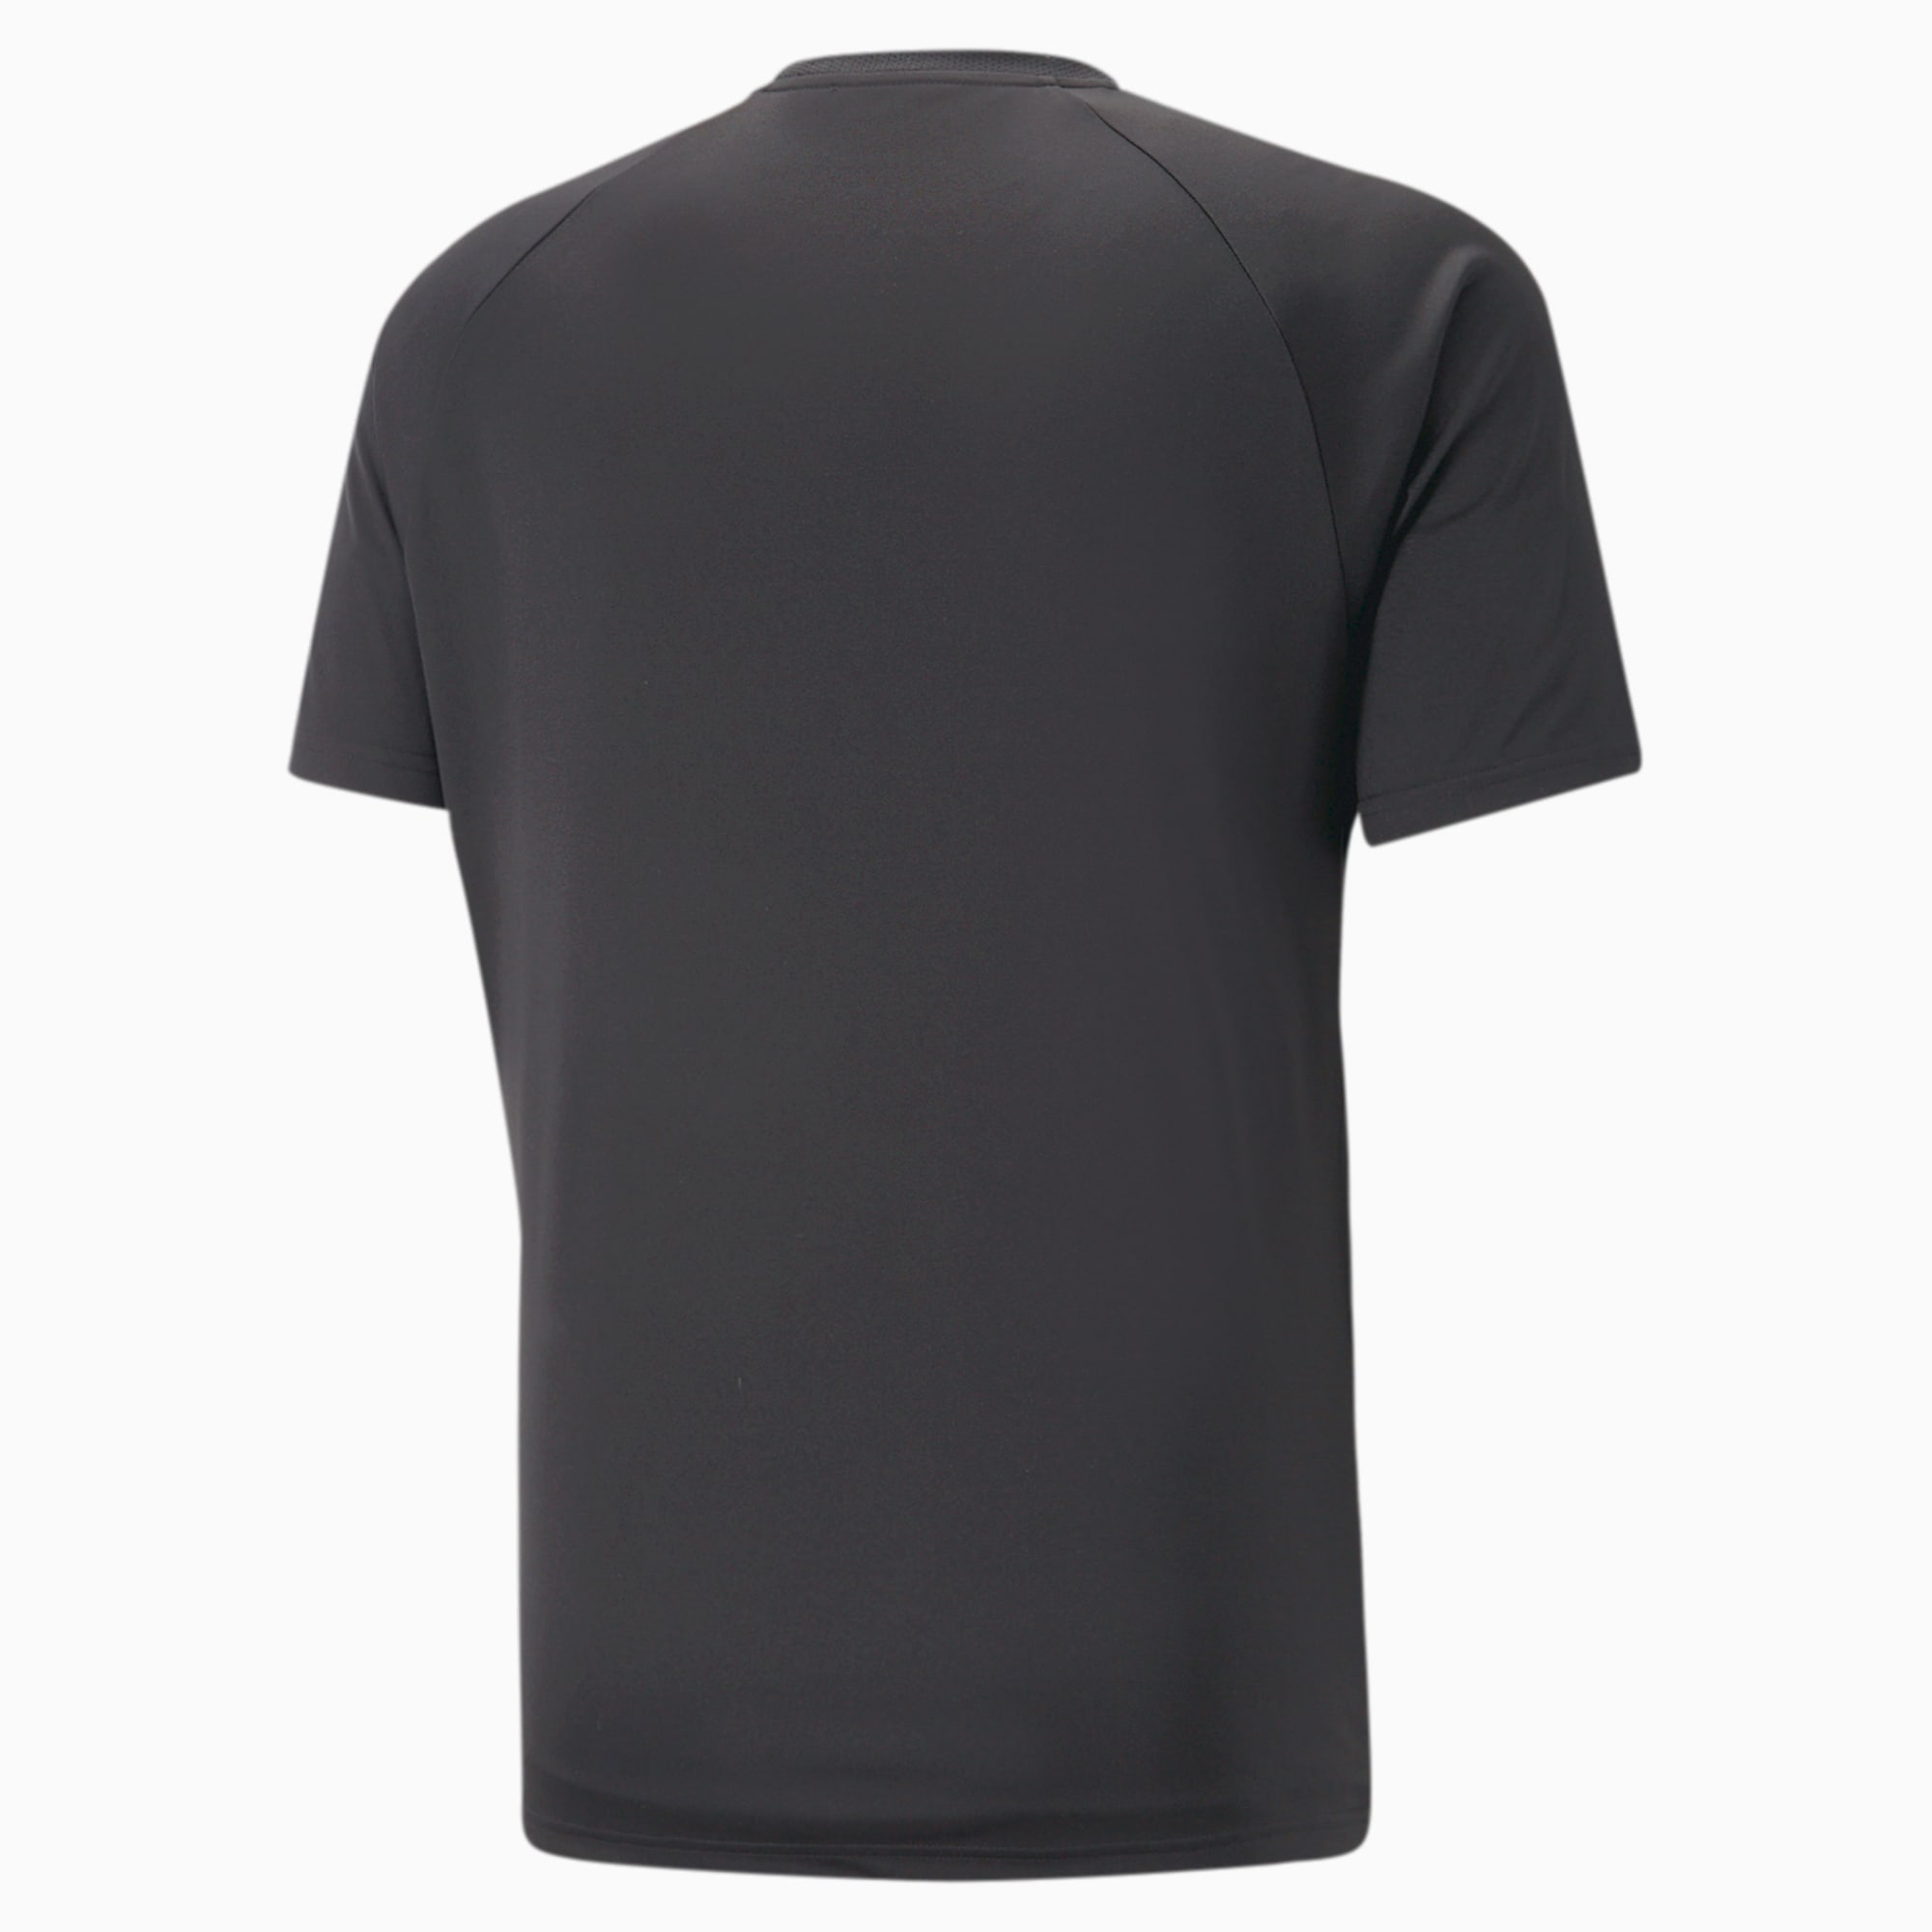 PUMA Teamliga Graphic Football Jersey Men, Black/Shadow Grey, Size XS, Clothing